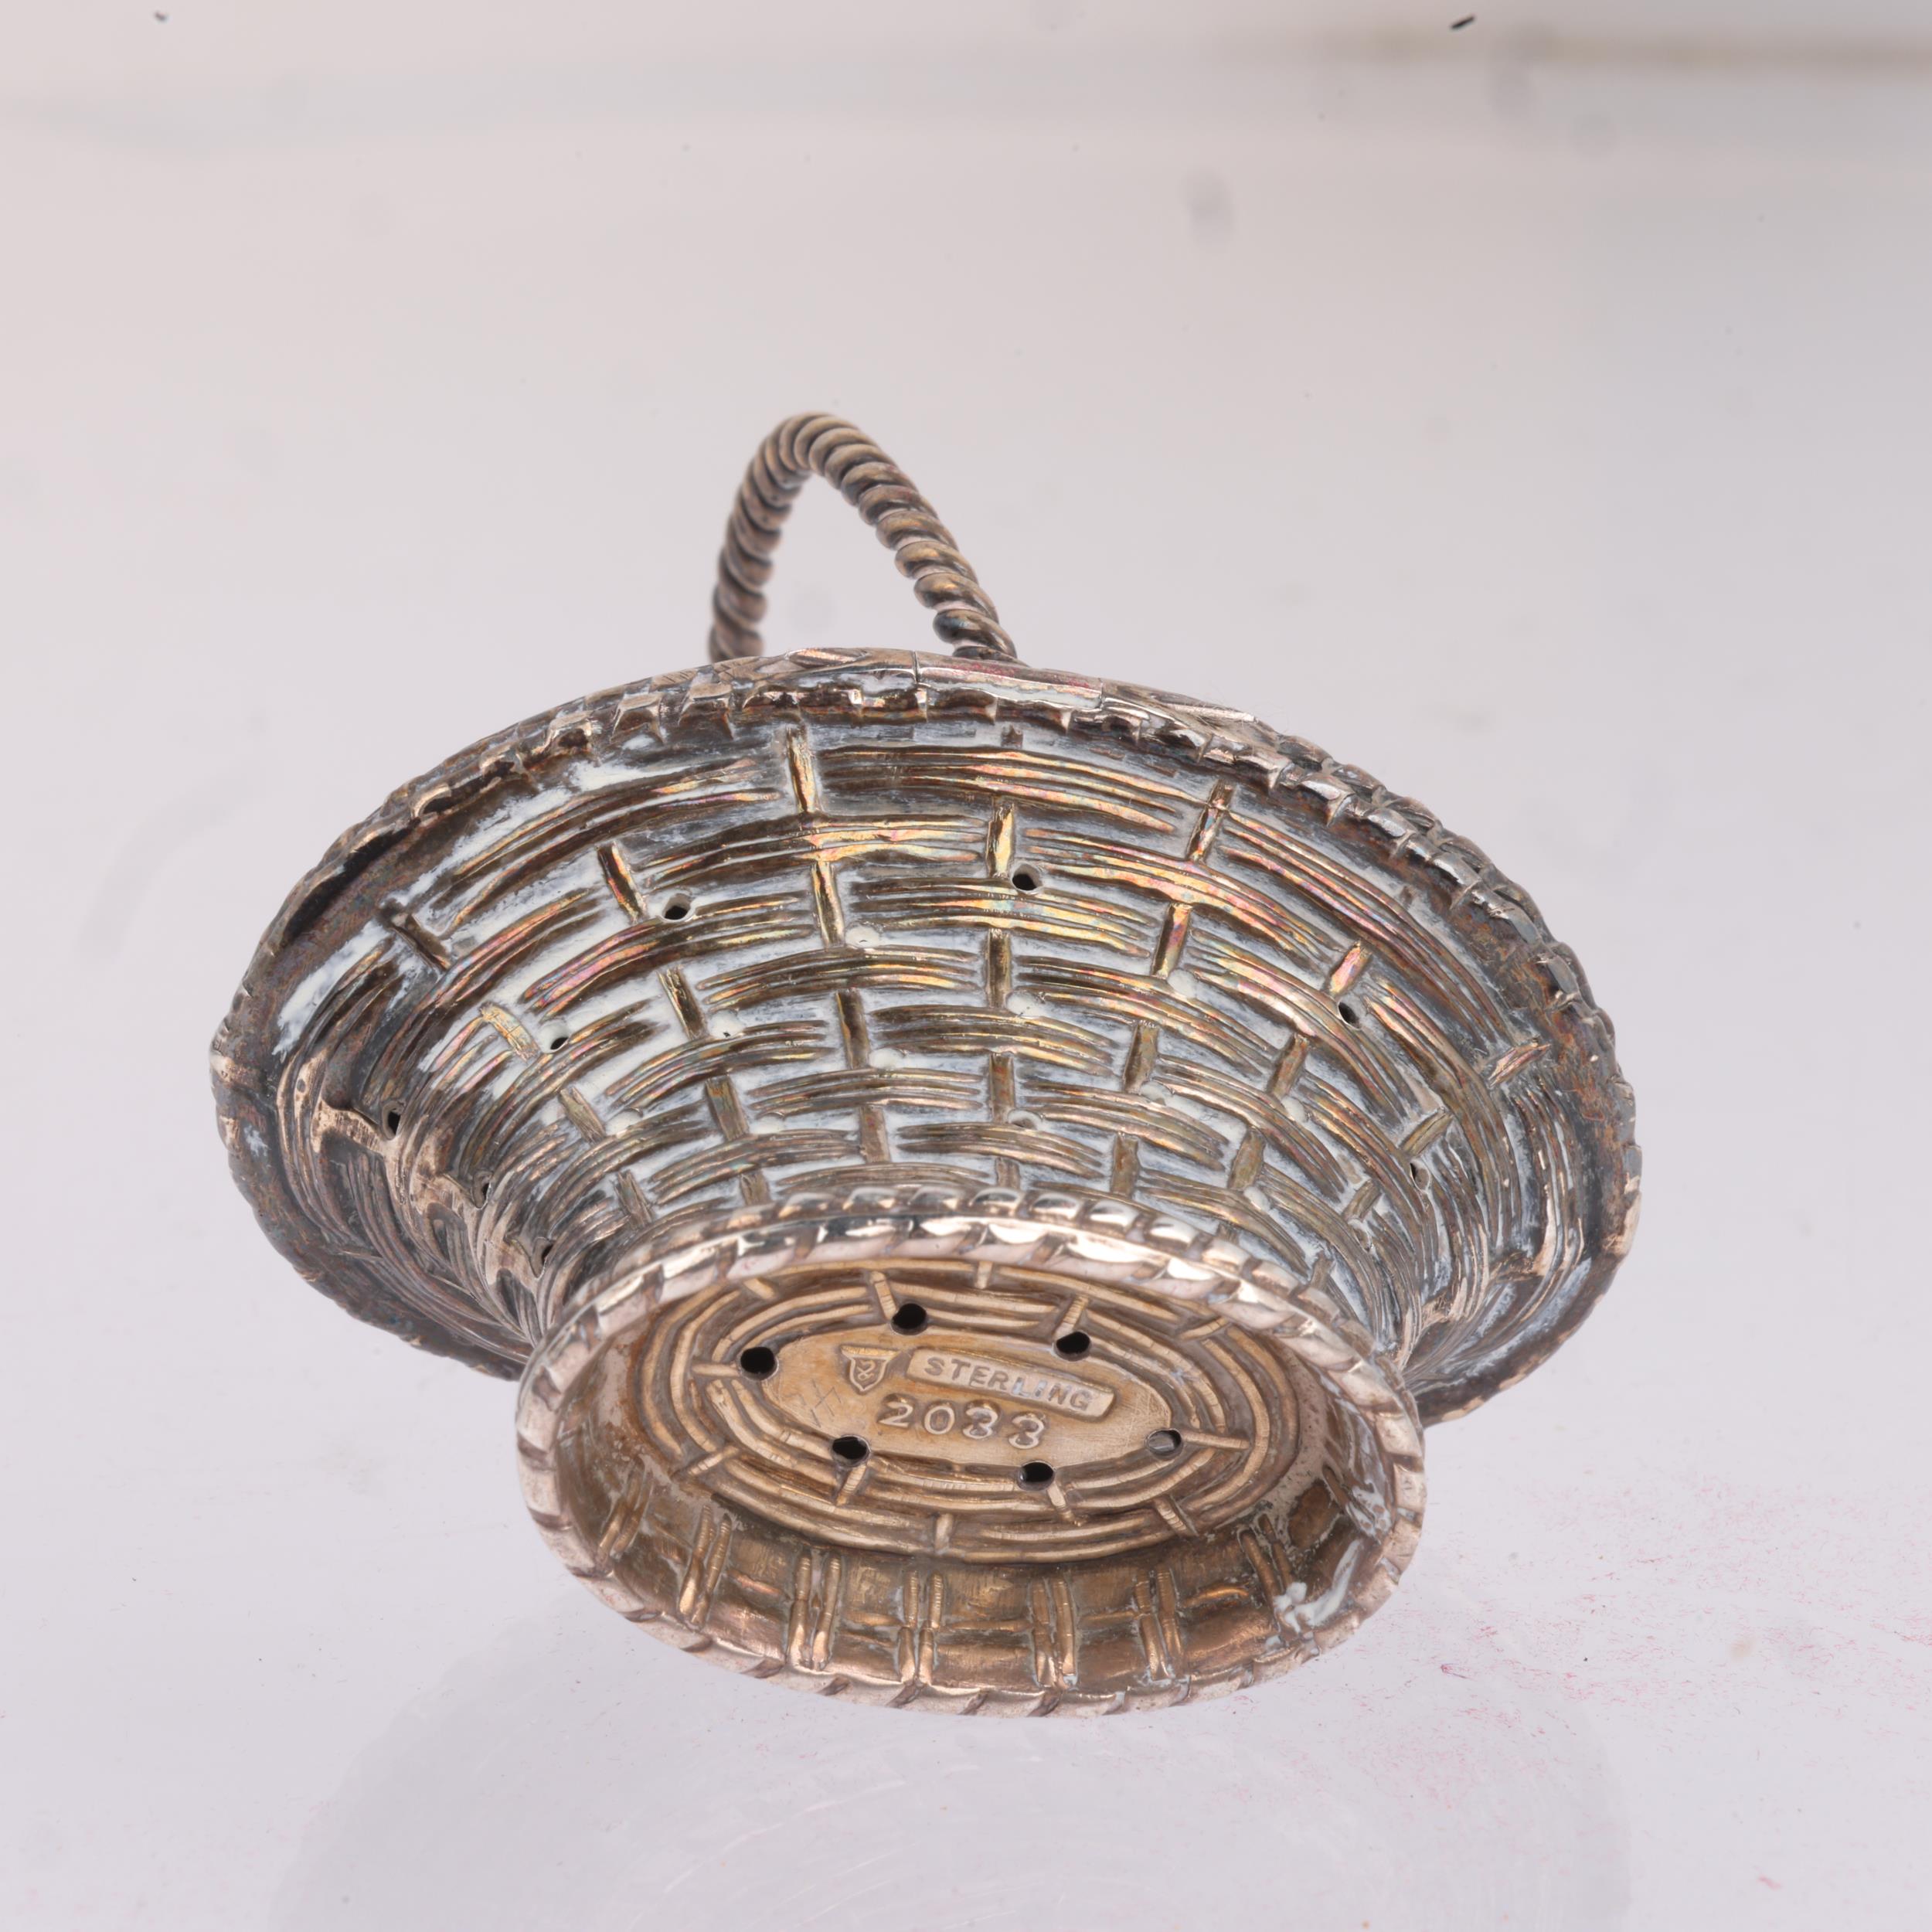 An American novelty sterling silver wicker basket pomander, Simons Brothers, Philadelphia, model no. - Image 3 of 3